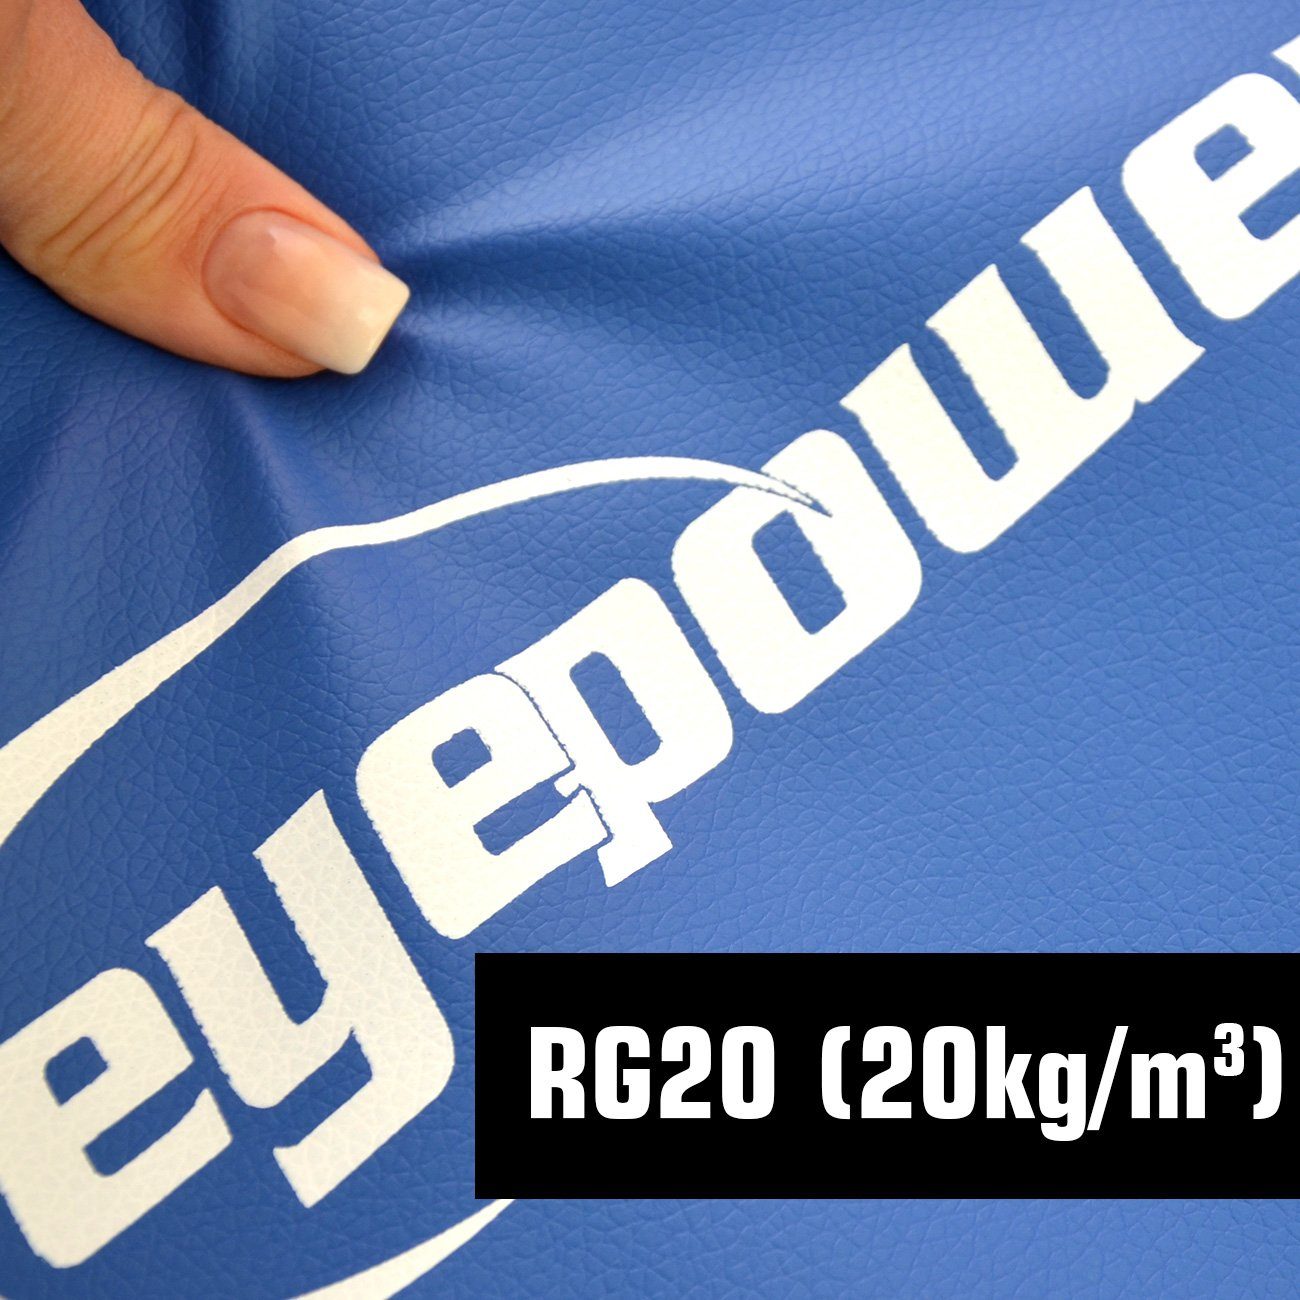 eyepower Robust XL 190x60x5cm Faltbare Gymnastikmatte extra - Fitnessmatte Turnmatte,